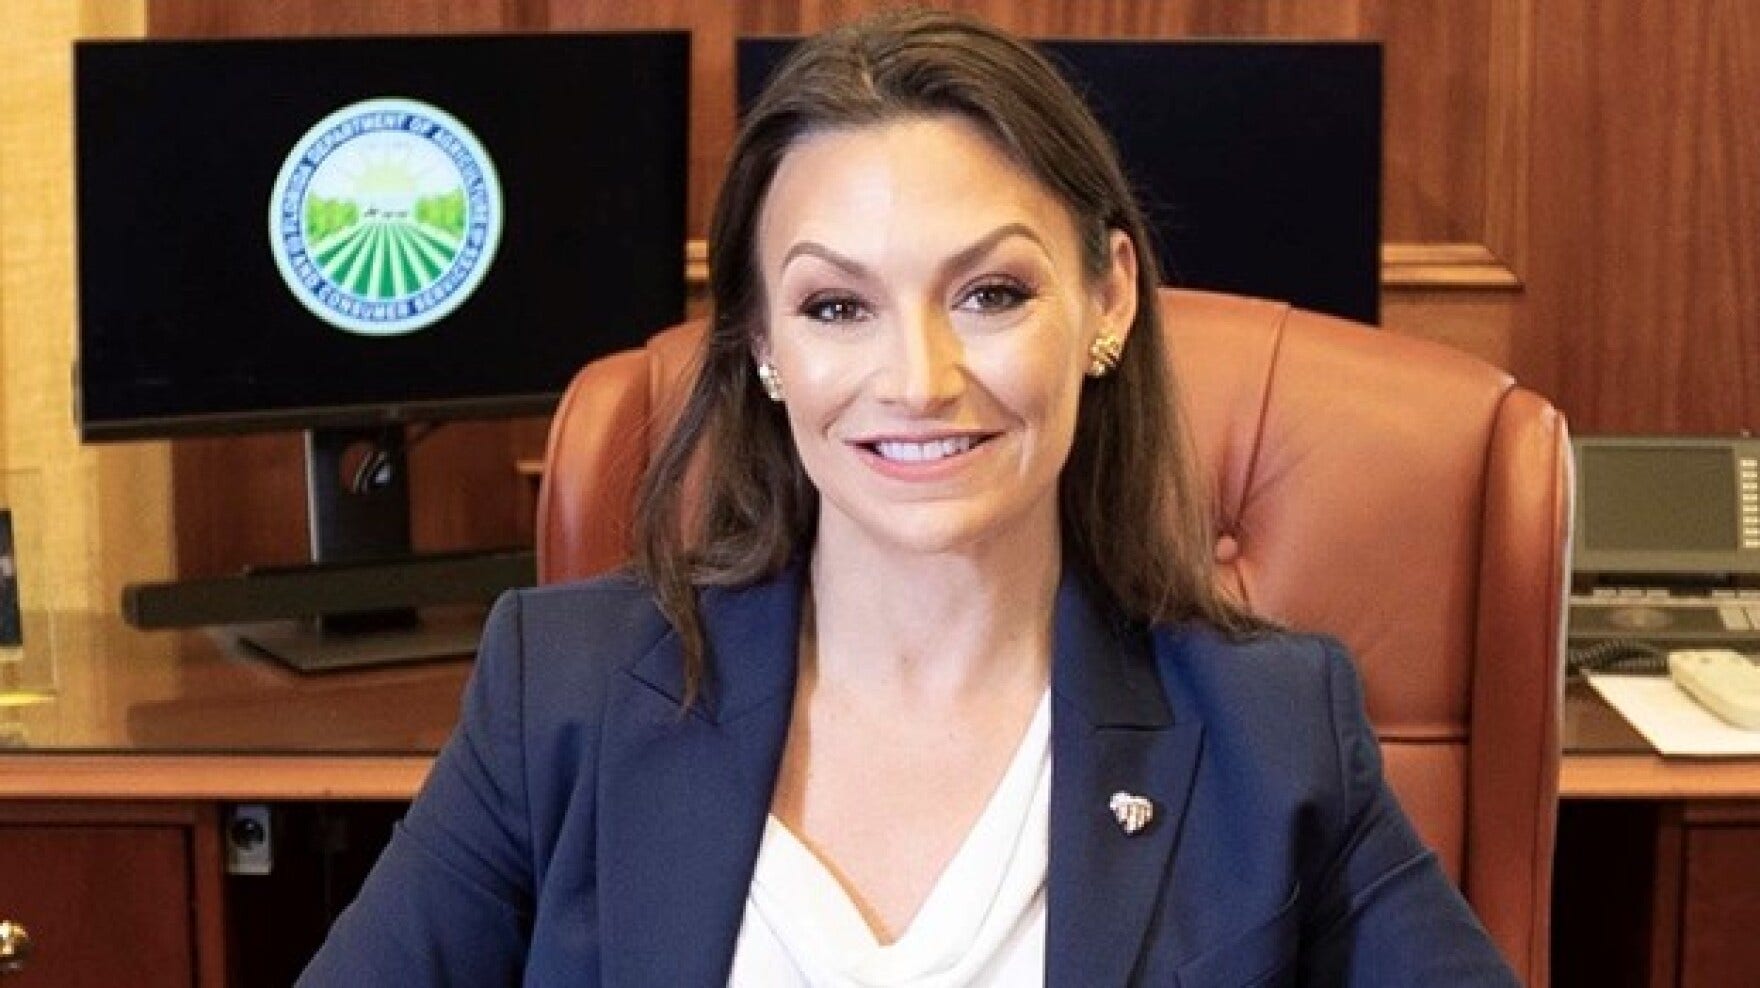 Marijuana Use And Gun Ownership: Florida Gubernatorial Candidate Nikki Fried On Why Cannabis Should Be Legalized